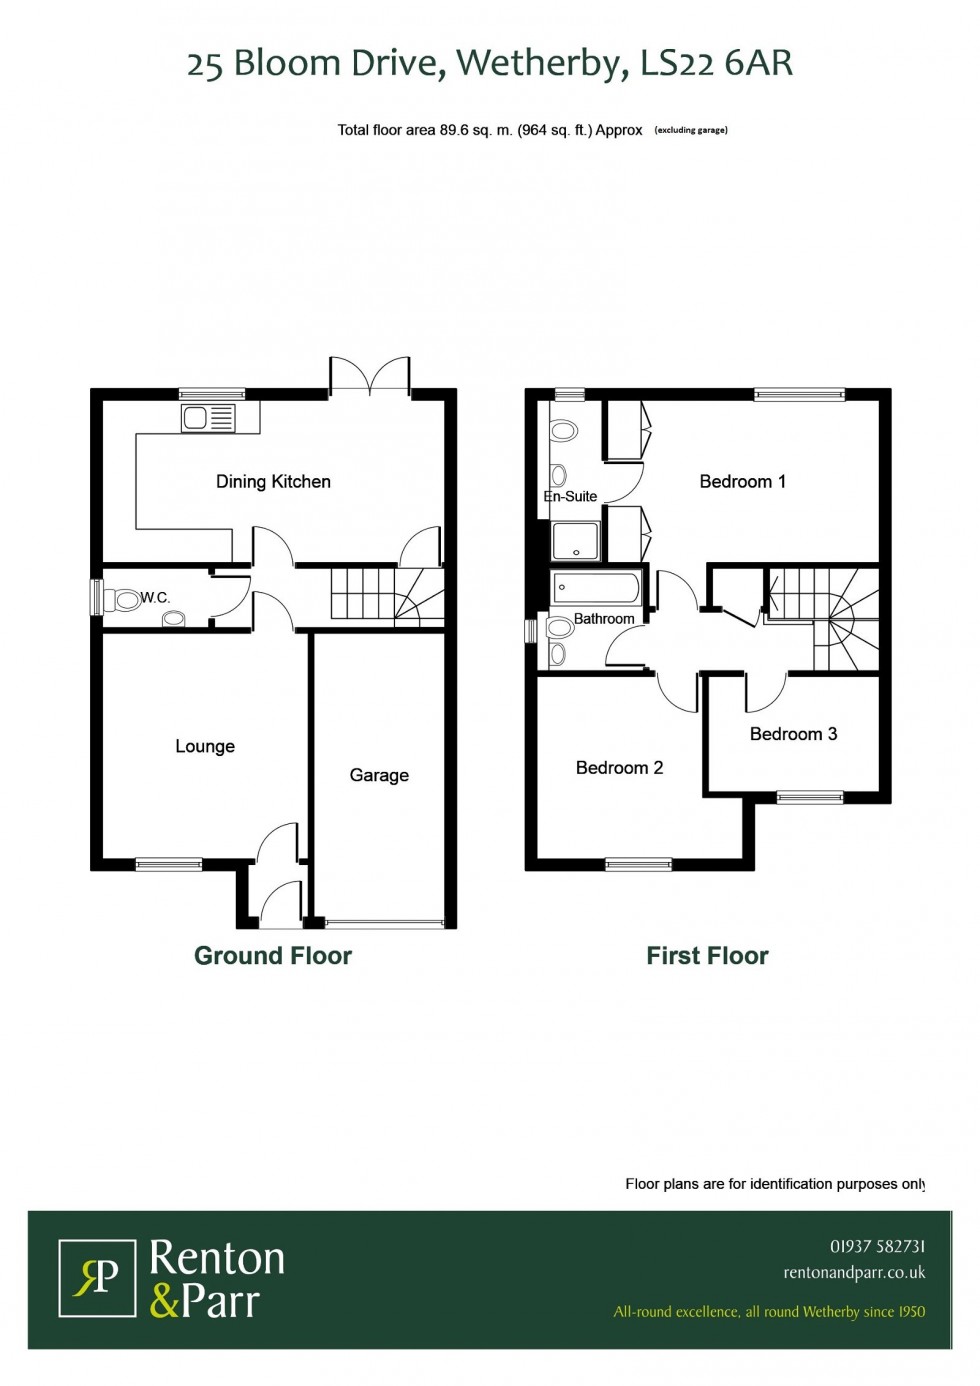 Floorplan for Bloom Drive, Wetherby, LS22